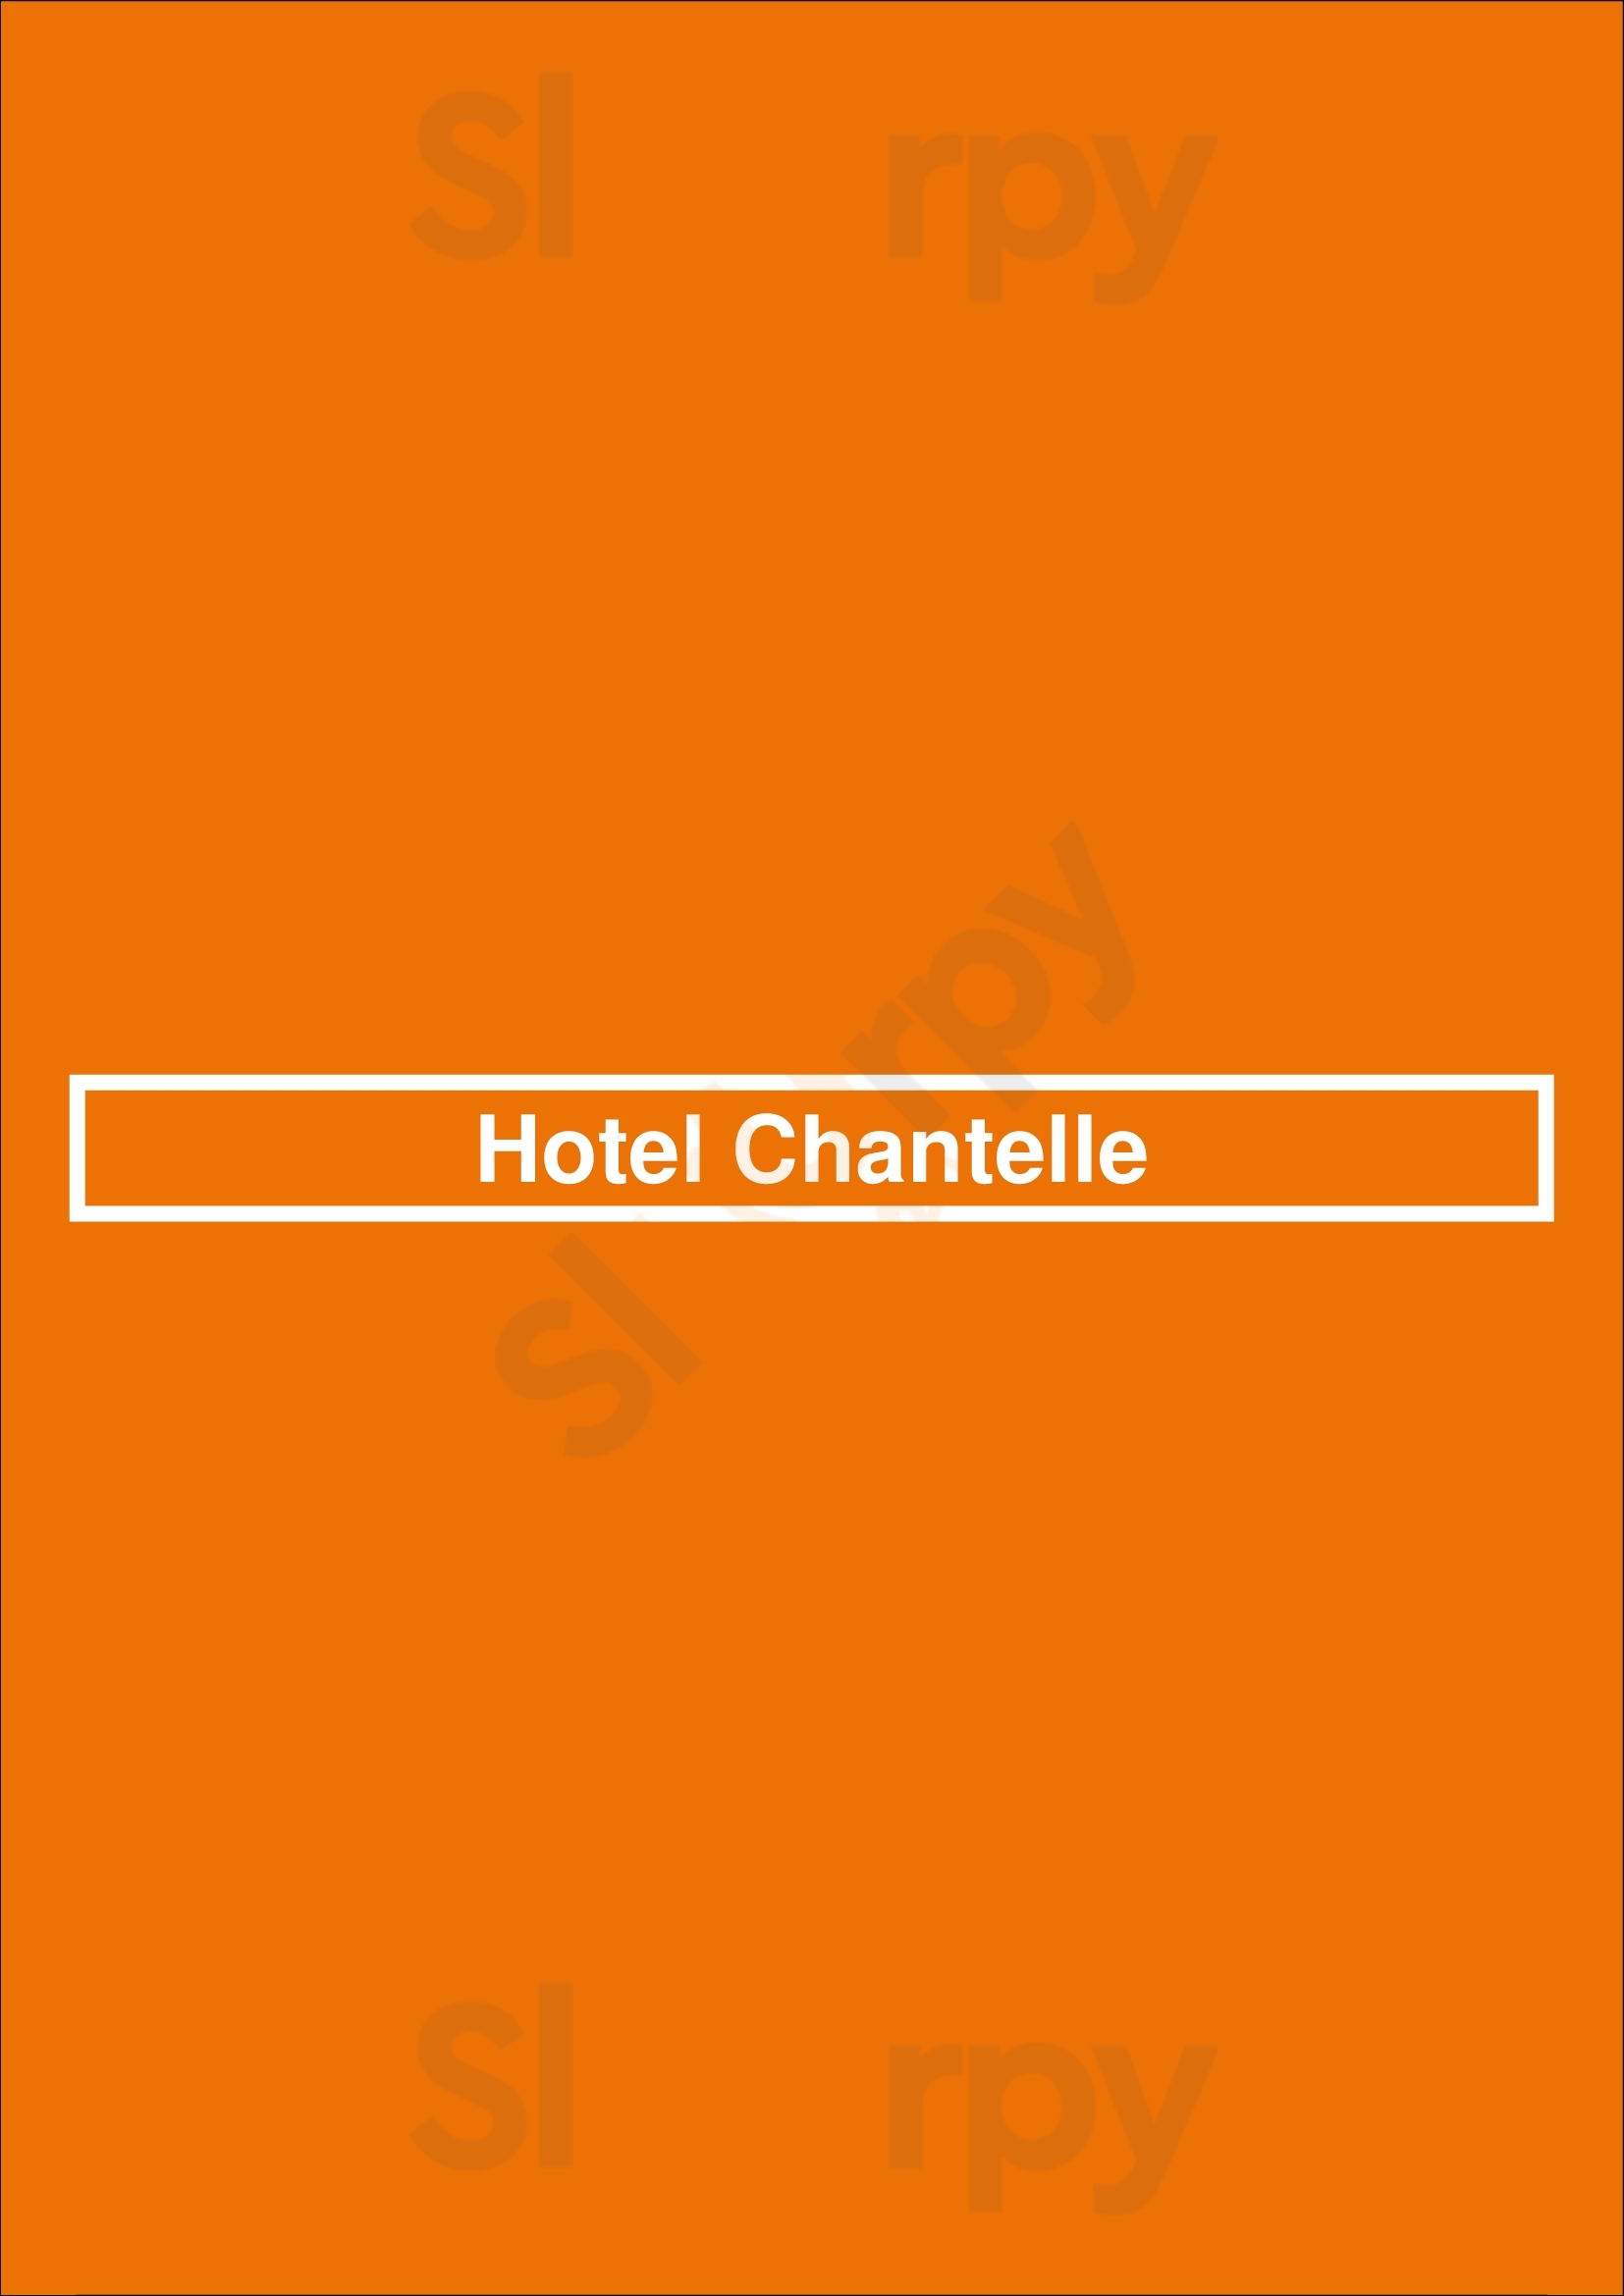 Hotel Chantelle New York City Menu - 1